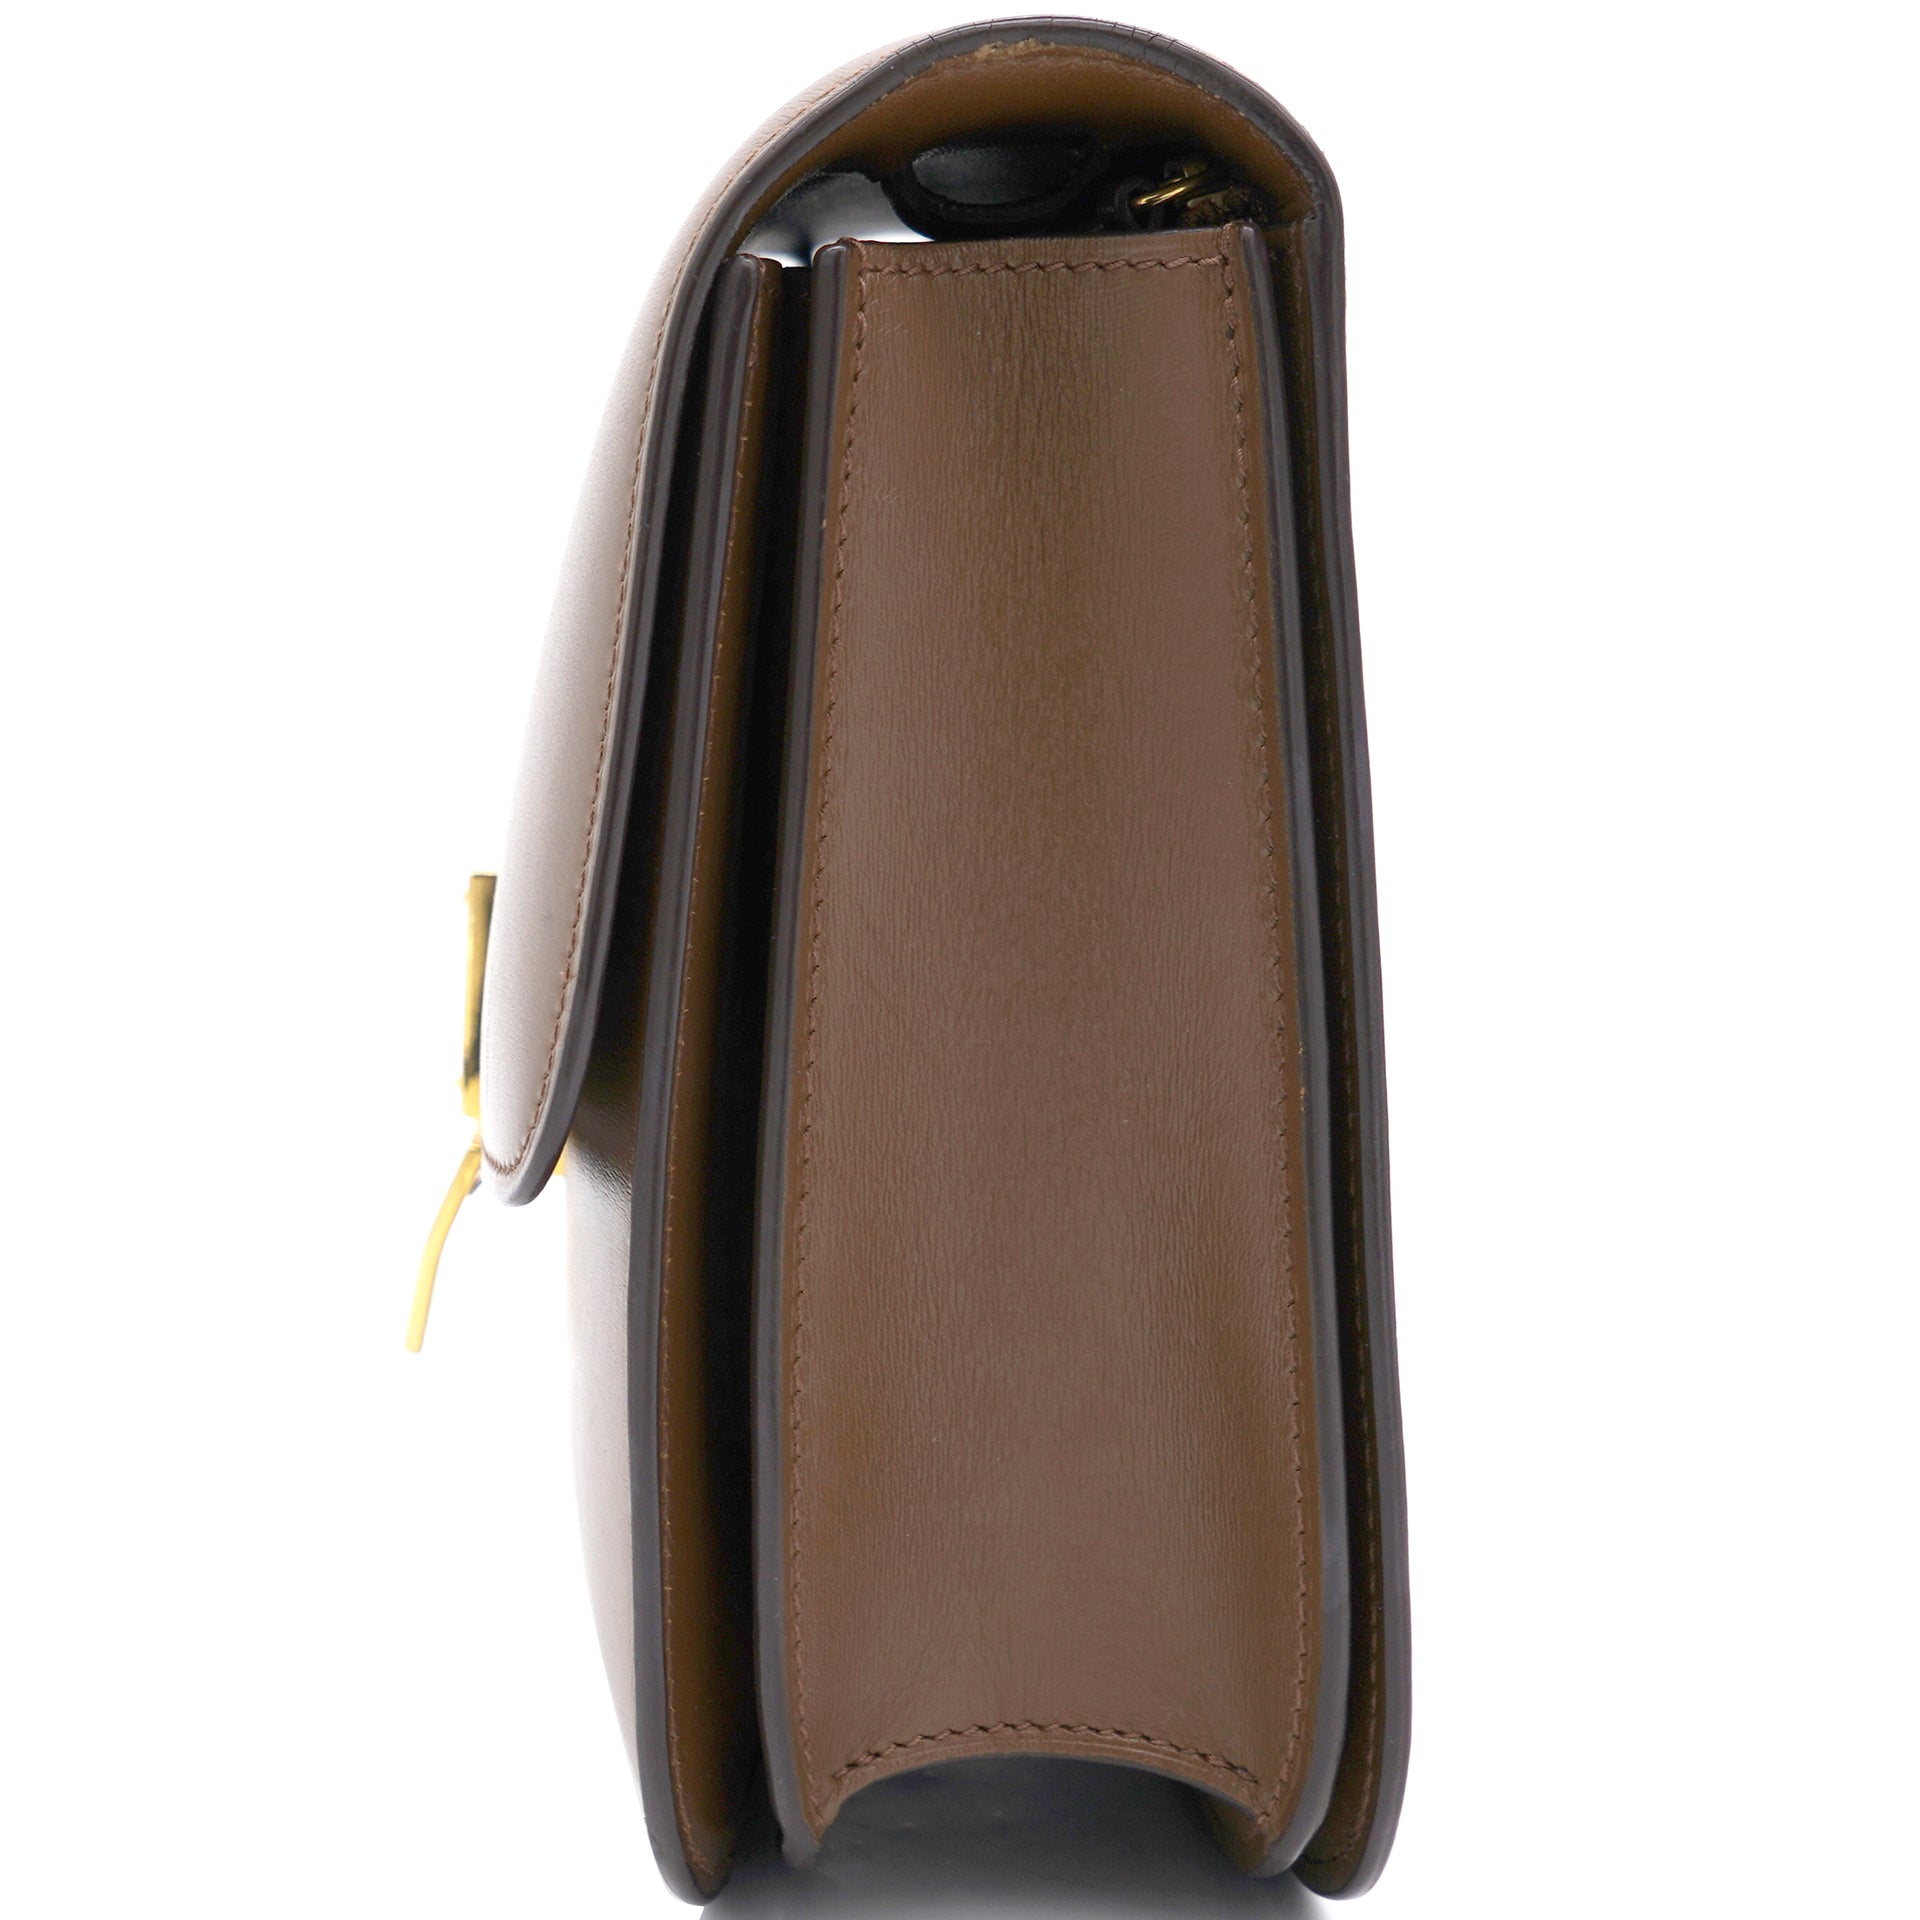 Caramel Leather Medium Classic Box Shoulder Bag